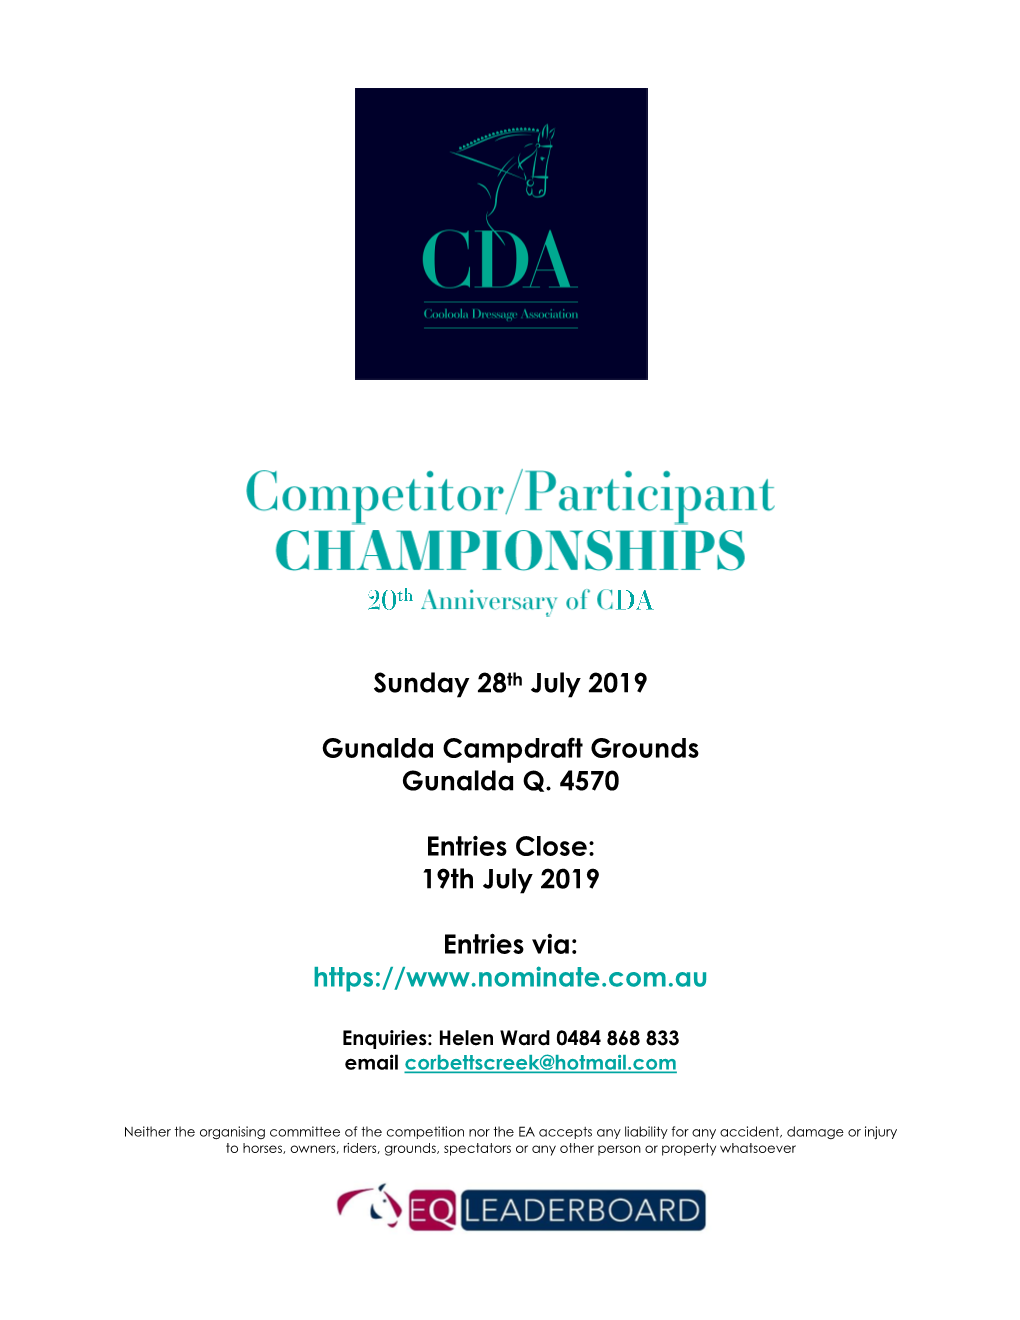 Sunday 28Th July 2019 Gunalda Campdraft Grounds Gunalda Q. 4570 Entries Close: 19Th July 2019 Entries Via